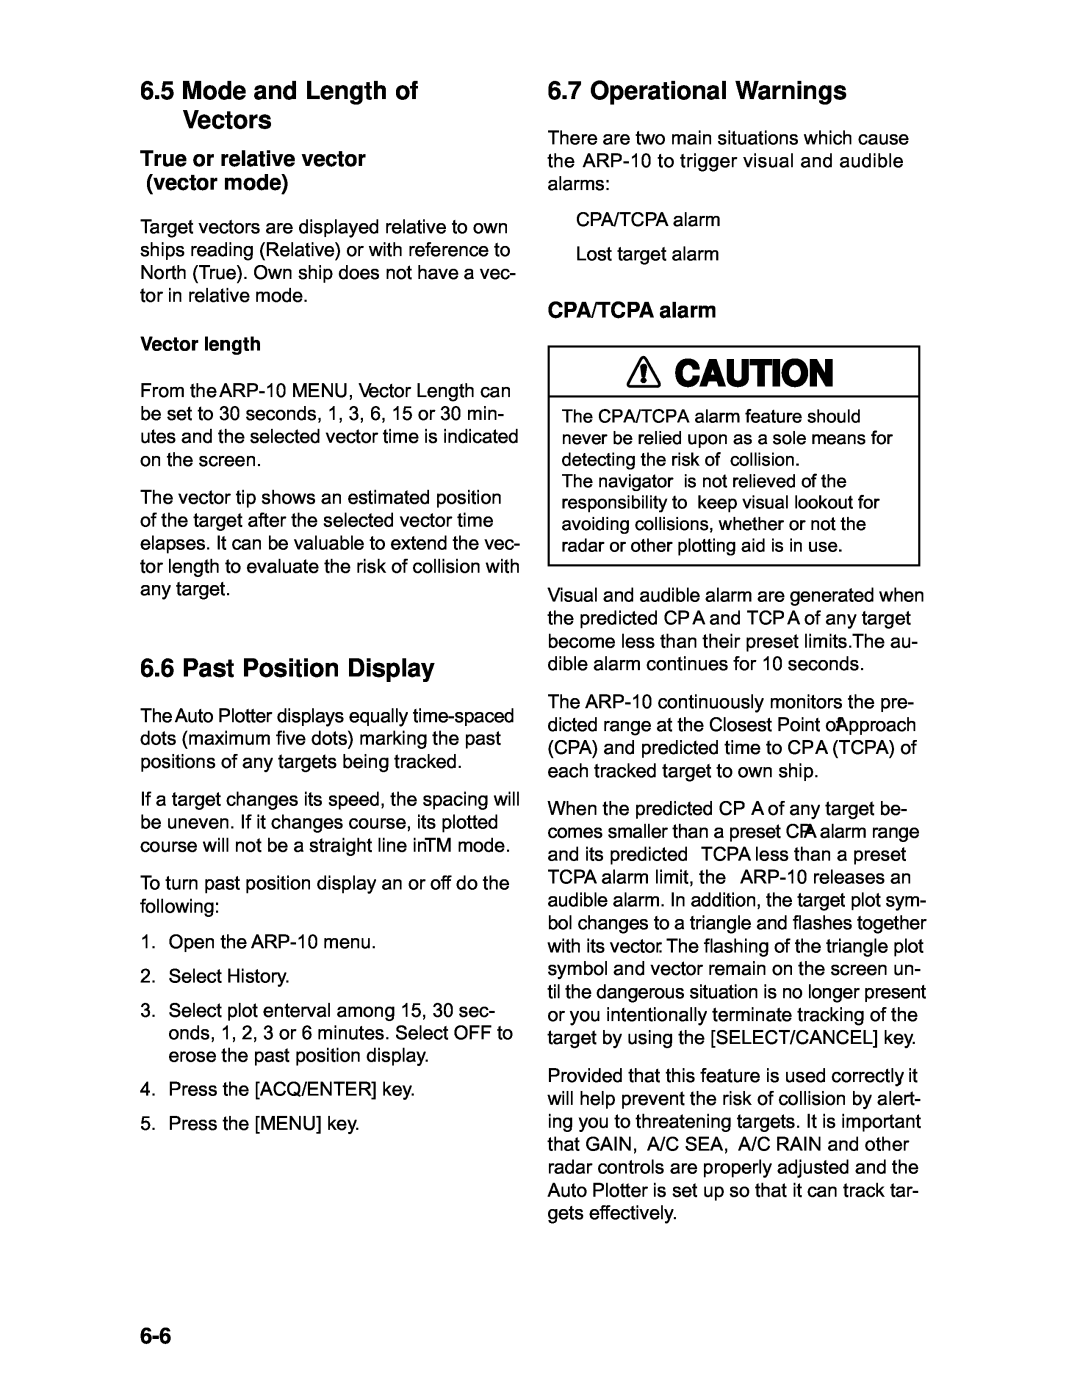 Furuno 1932 MARK-2 manual 6.5Mode and Length of Vectors, Past Position Display, Operational Warnings, CPA/TCPA alarm 